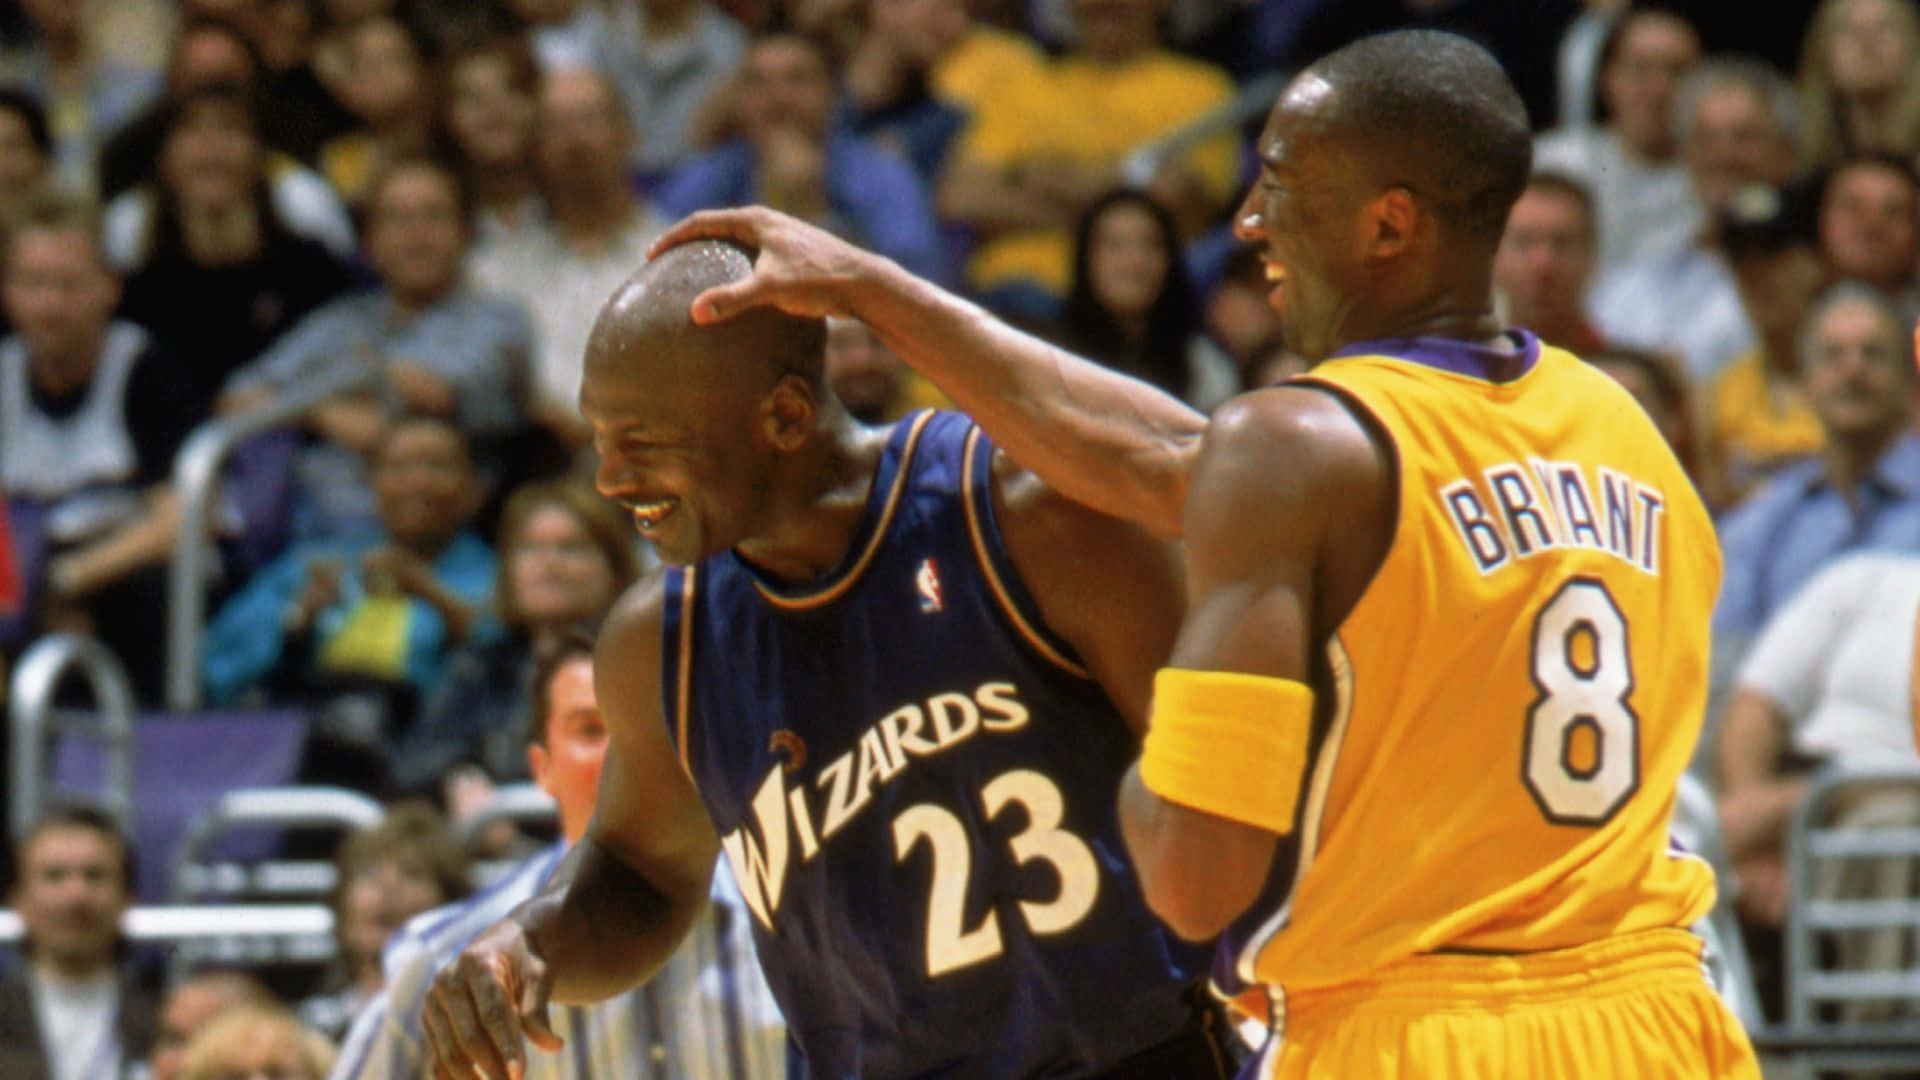 Basketball Stars Kobe Bryant And Michael Jordan Fun Photograph Wallpaper